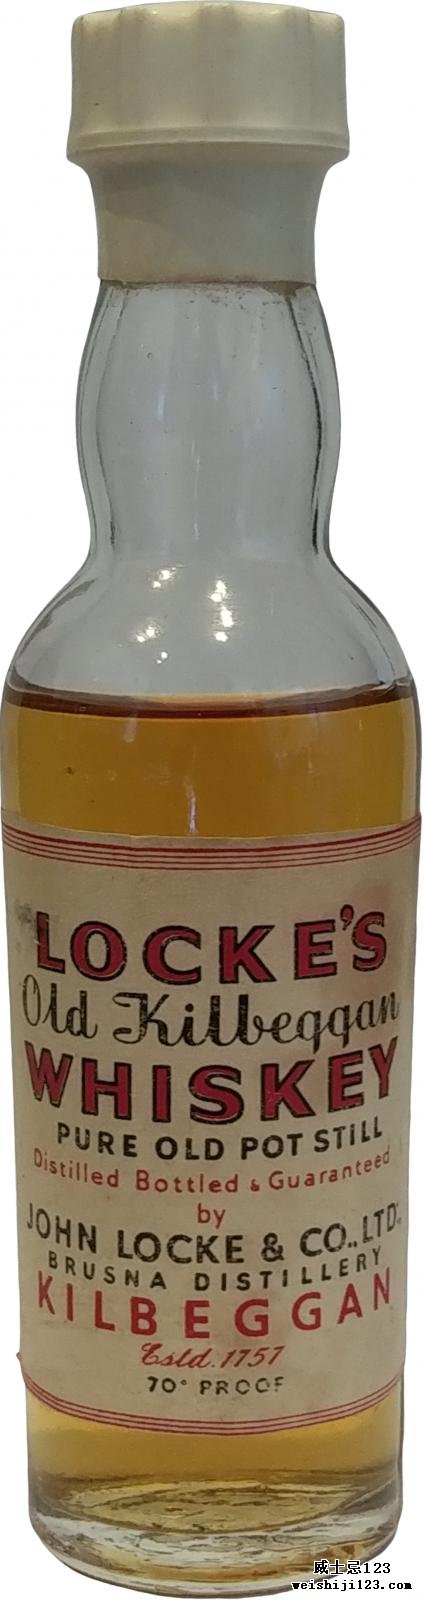 Locke's Old Kilbeggan Whiskey